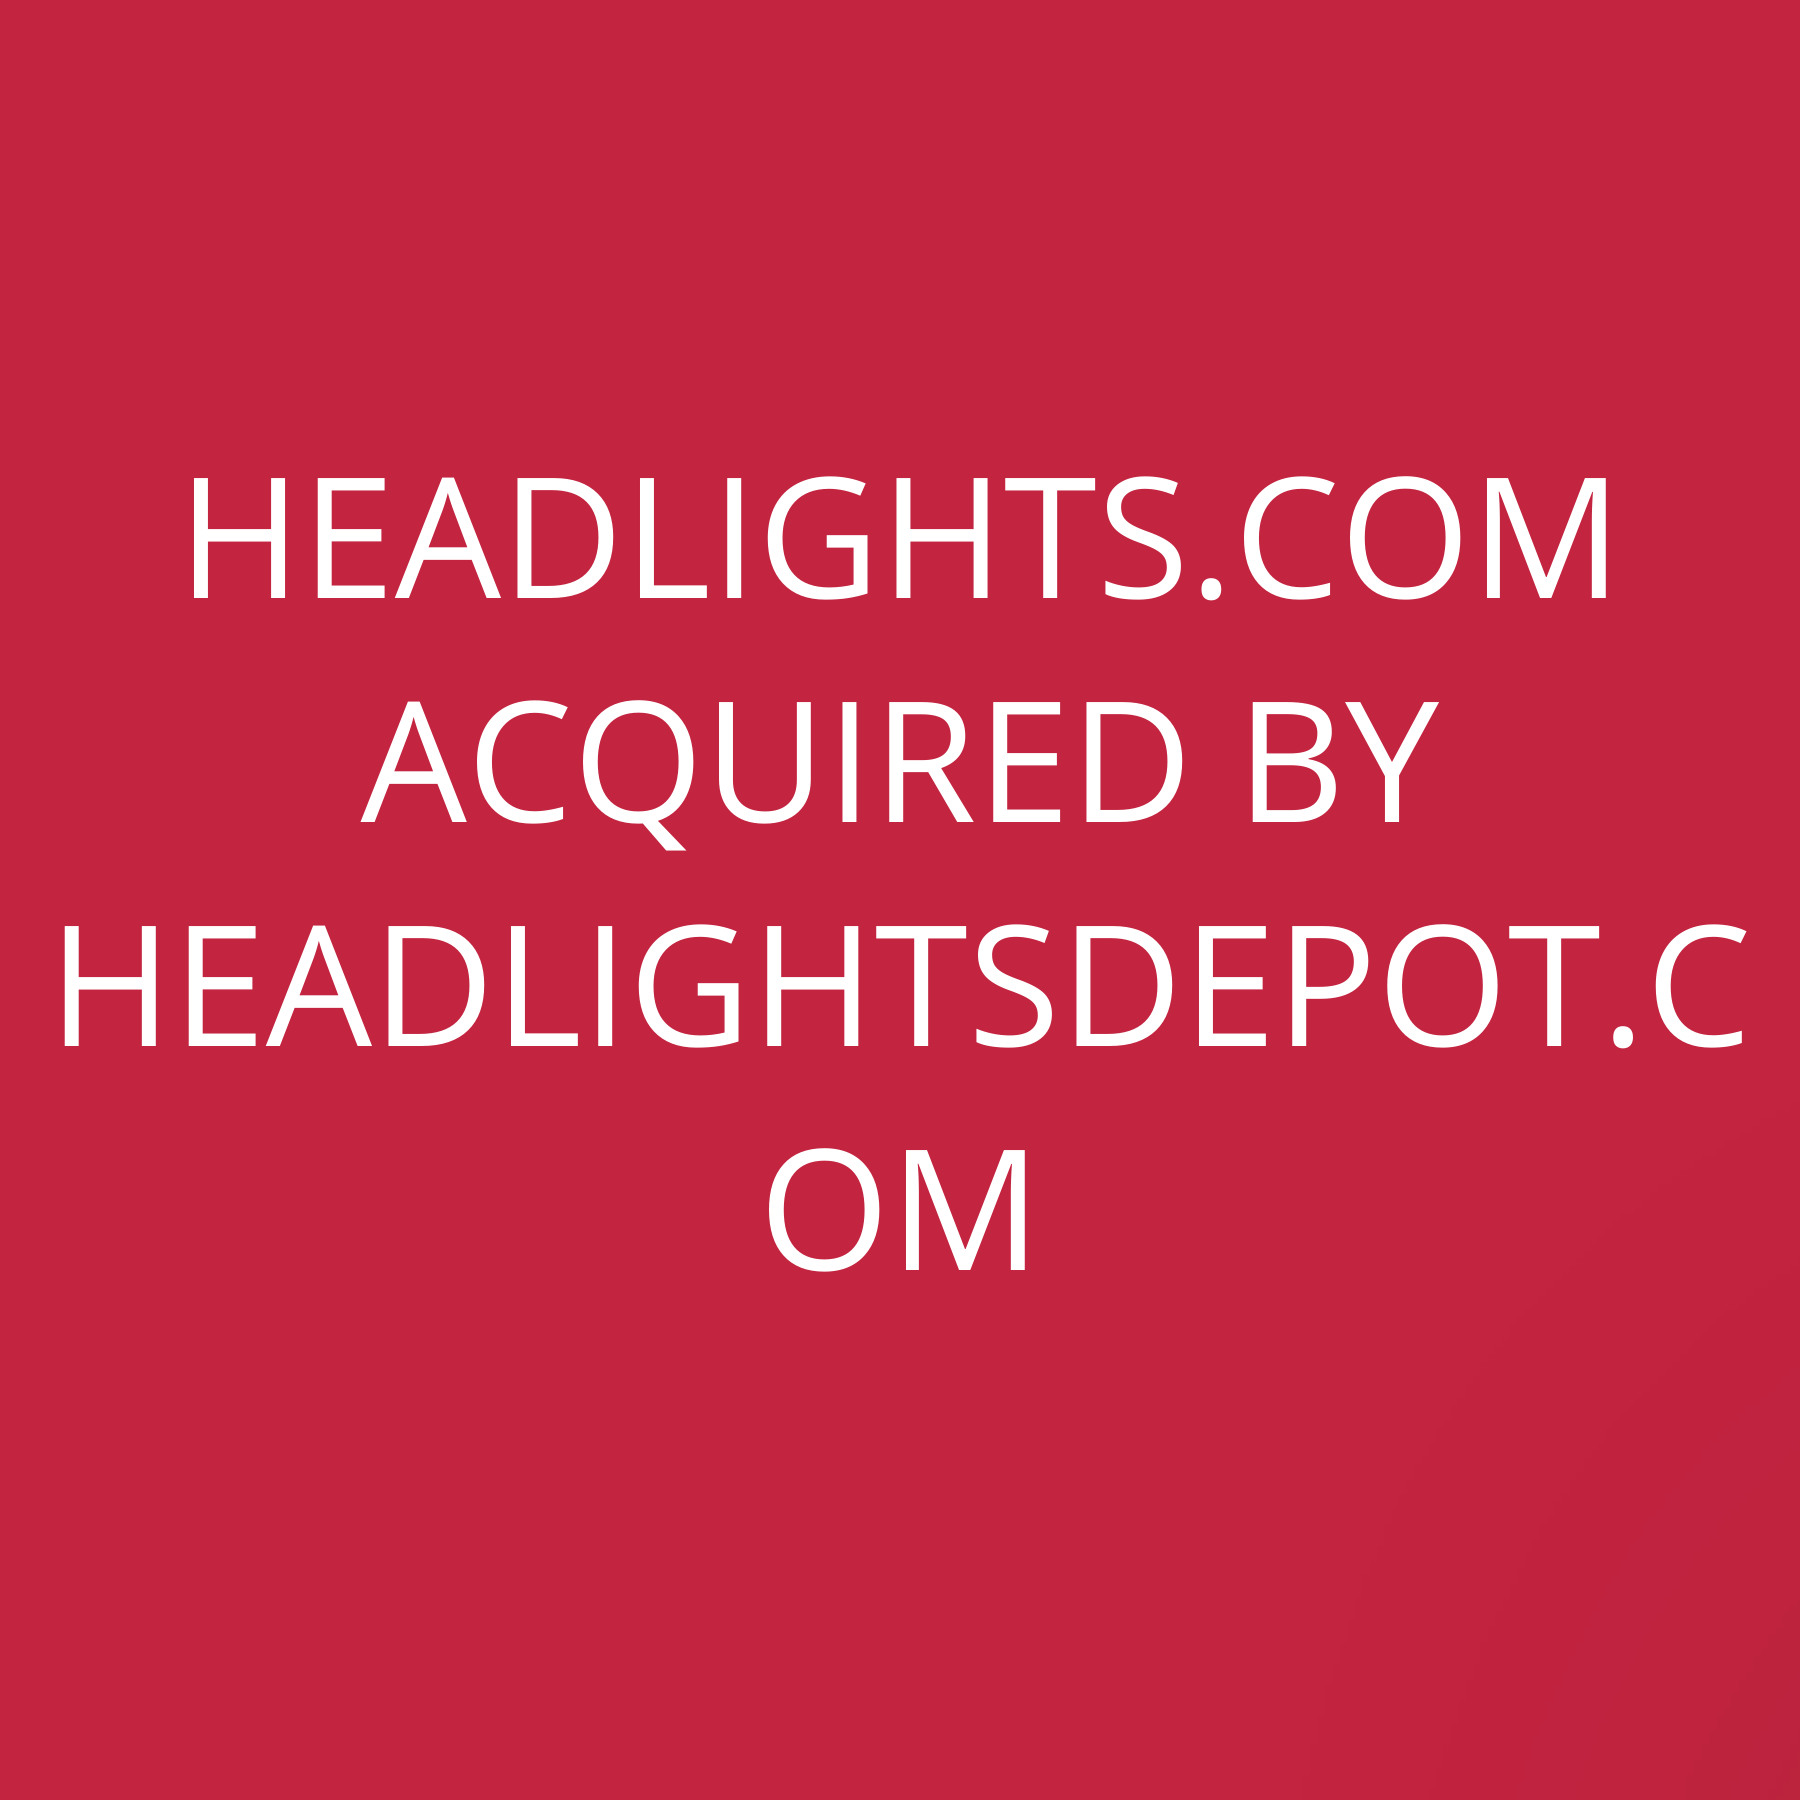 Headlights.com acquired by HeadlightsDepot.com